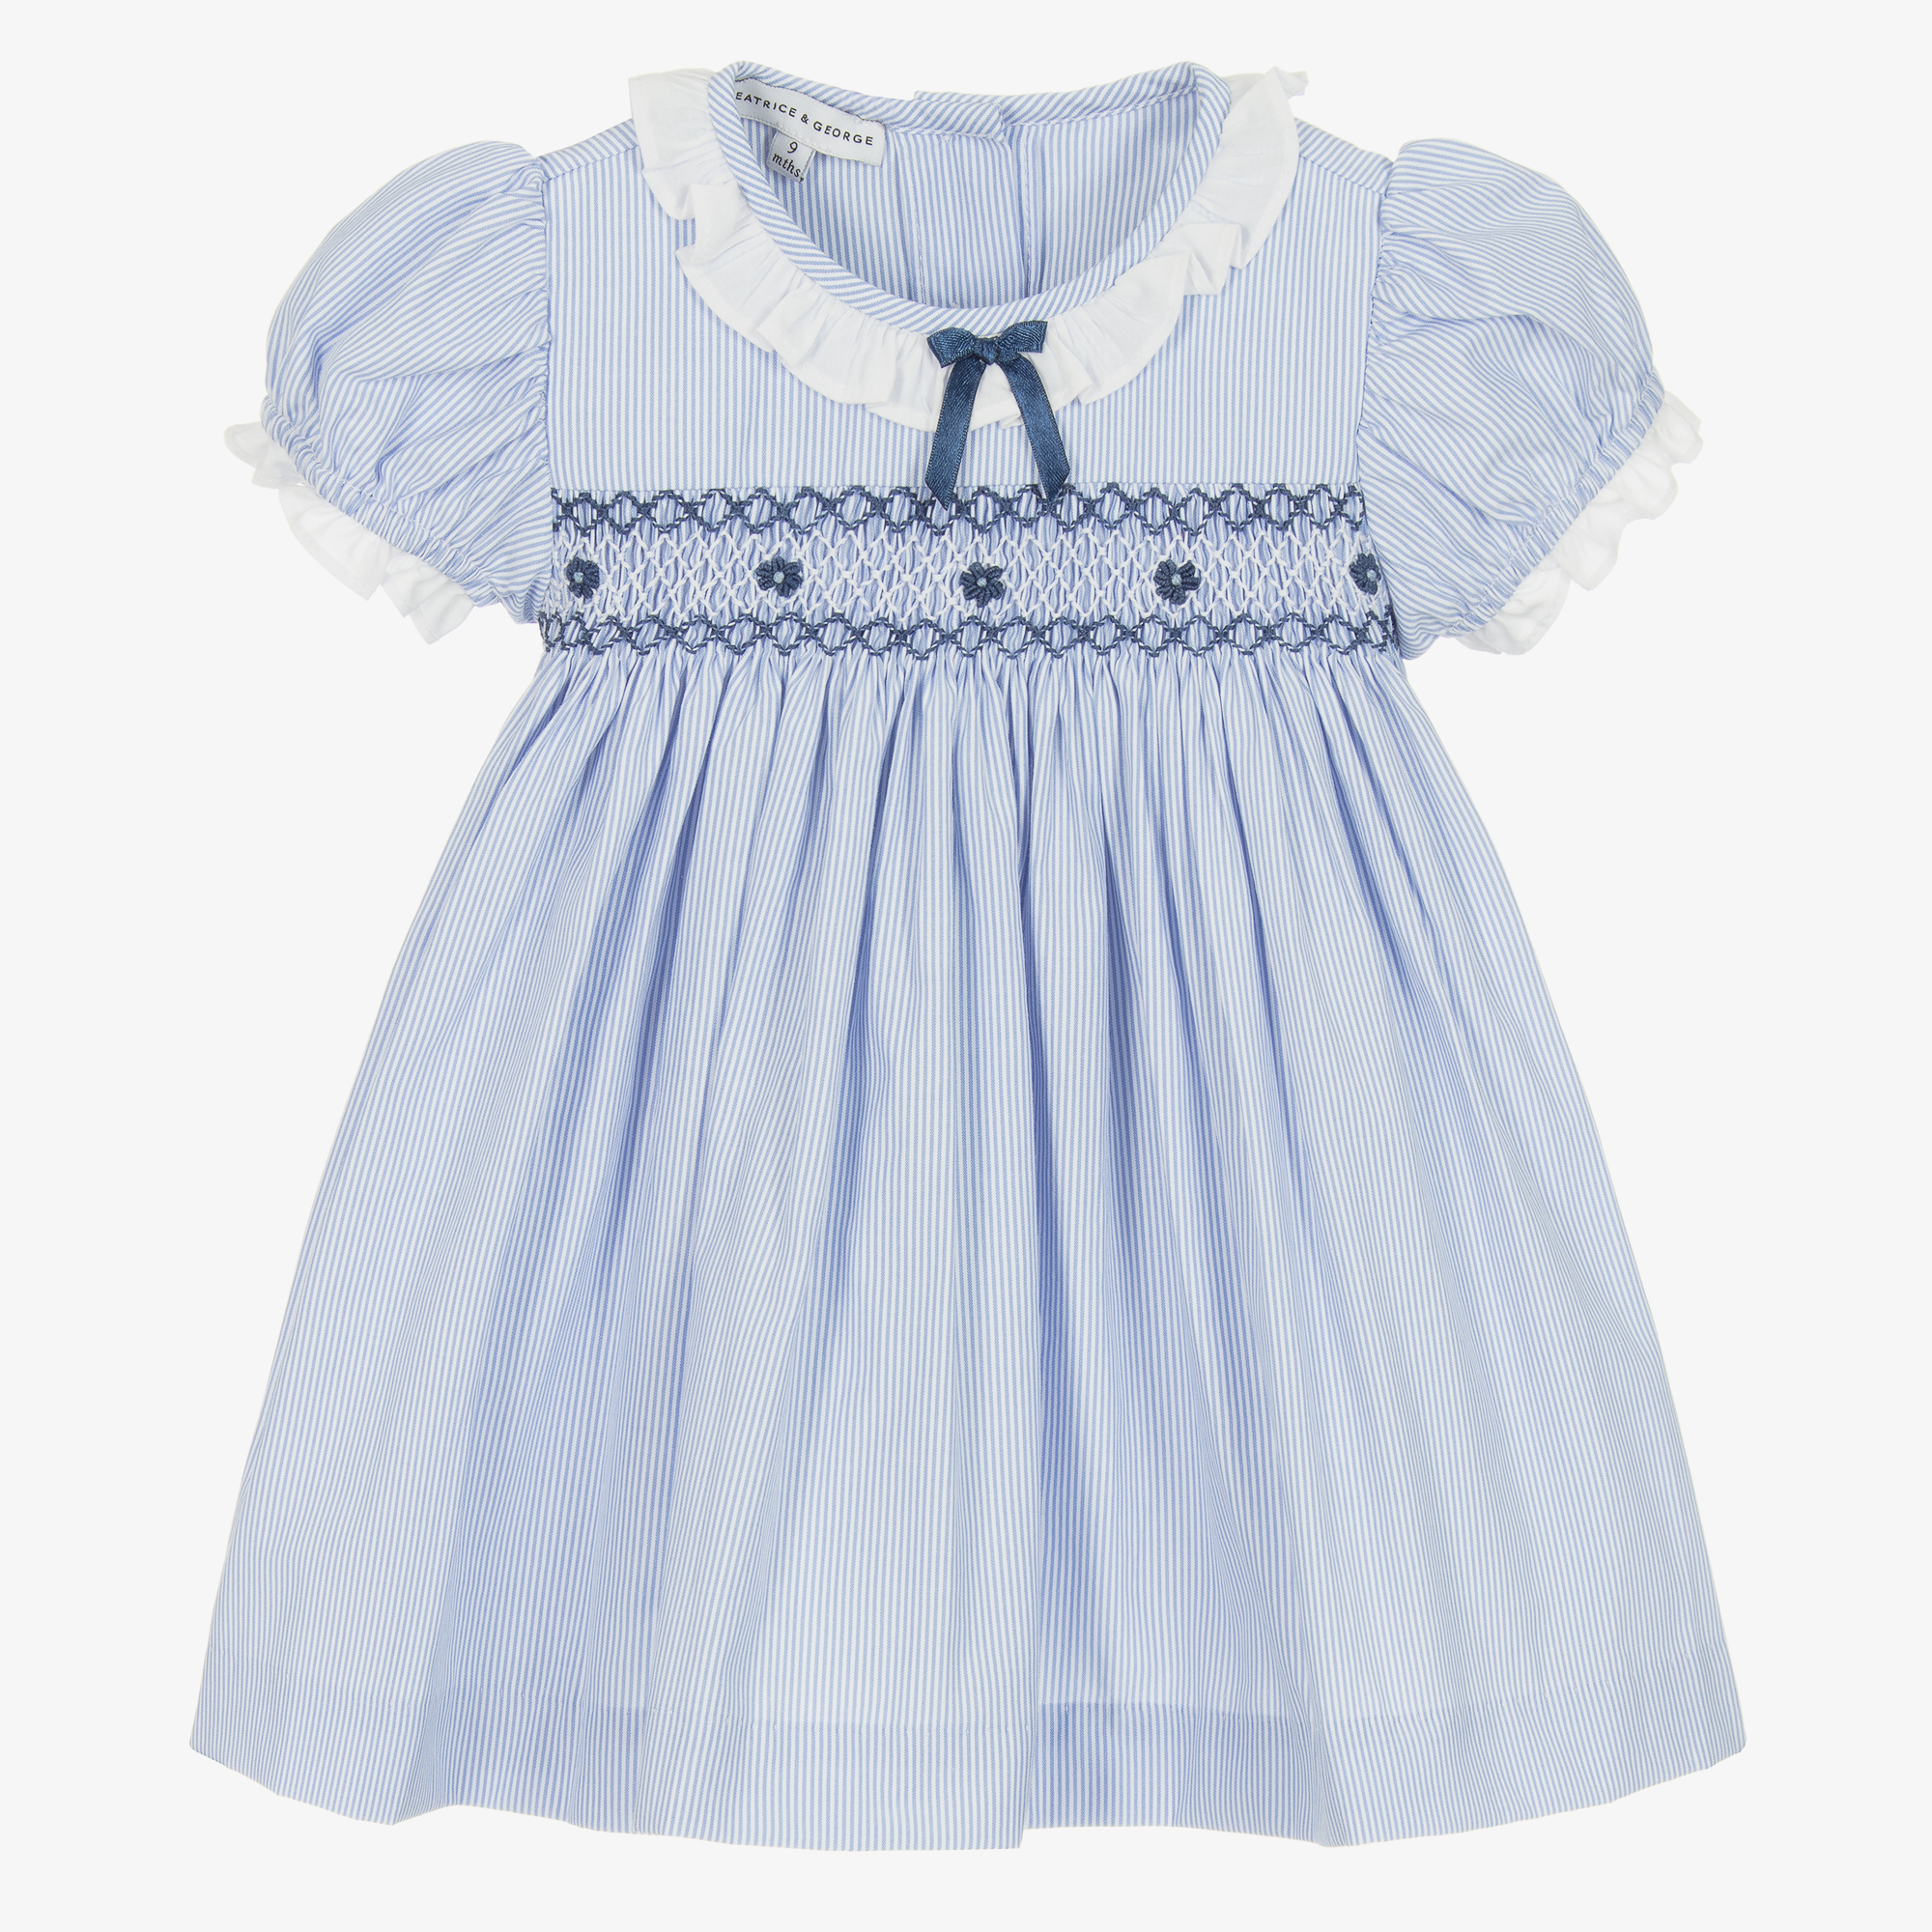 Beatrice & George - Girls Blue Velvet & Lace Dress